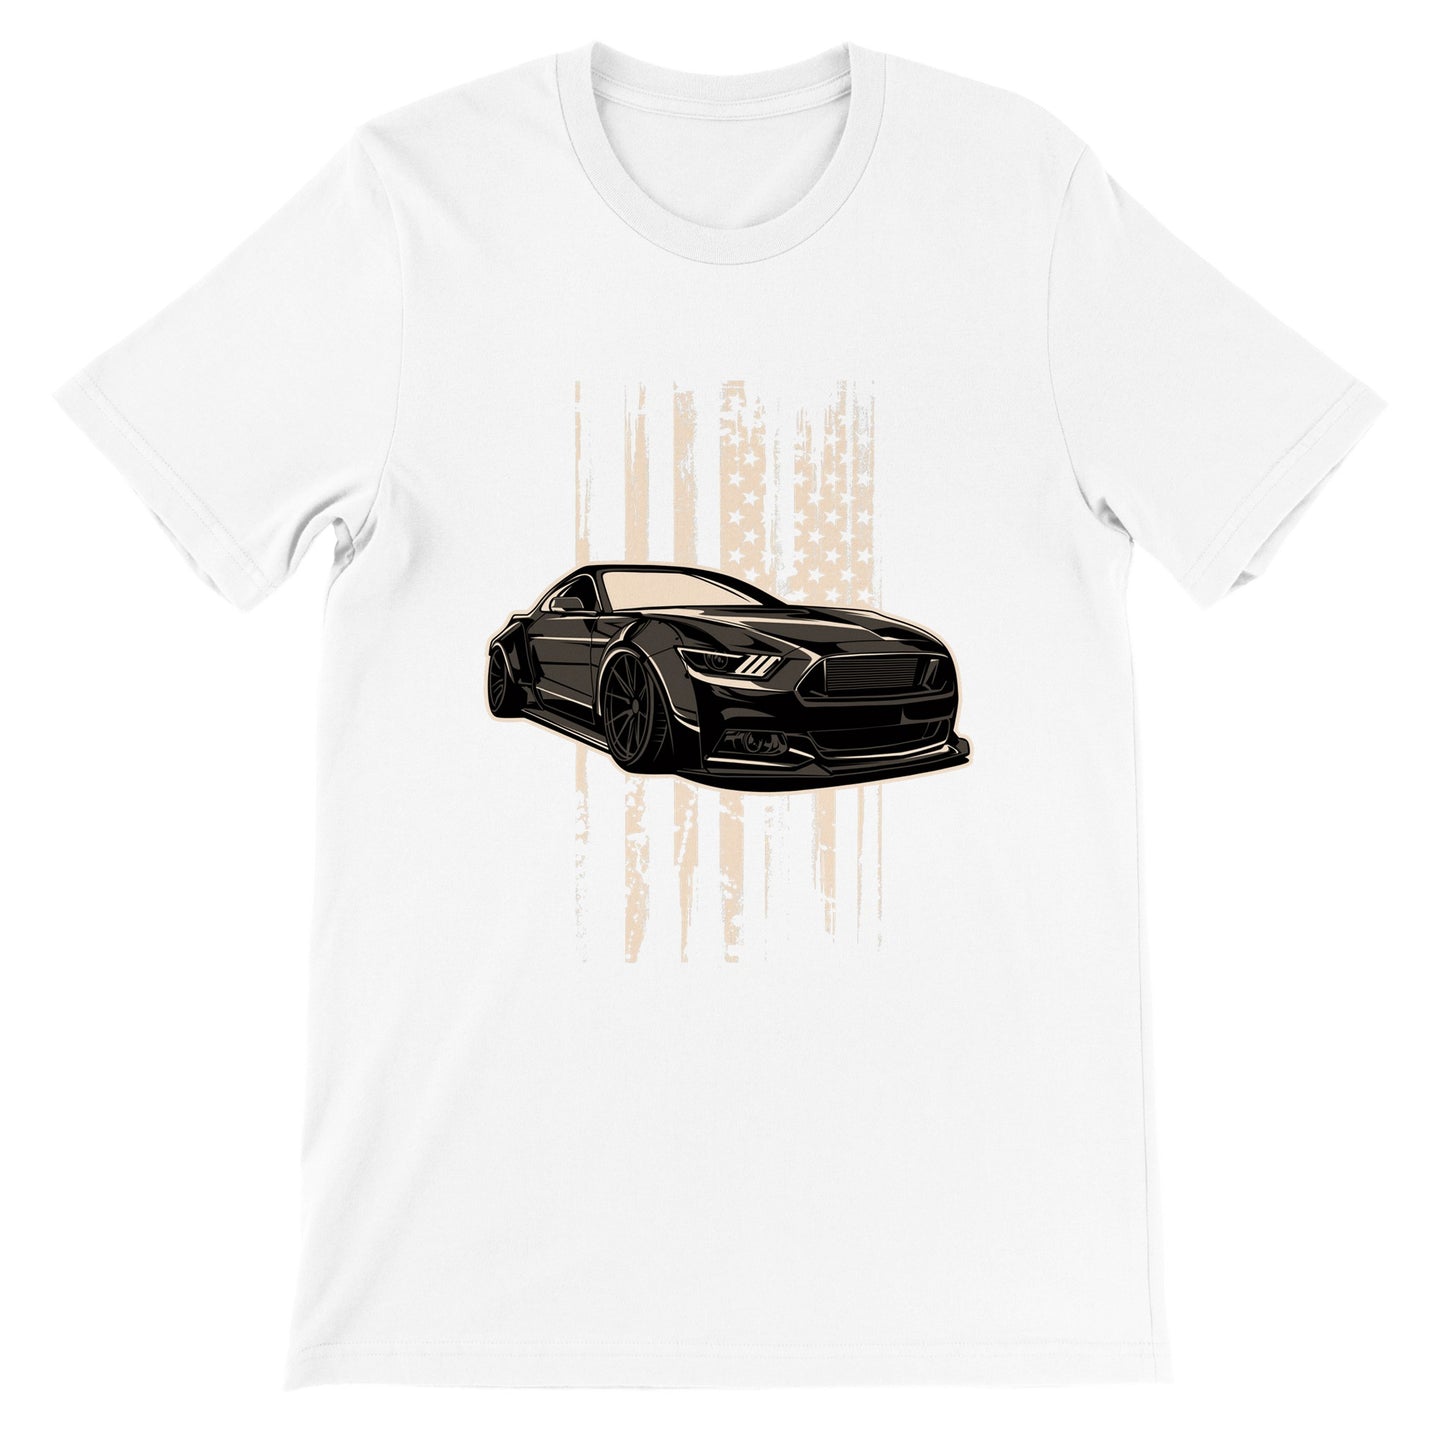 Car T-shirt - The Legendary Mustang - Artwork - Premium Unisex T-shirt